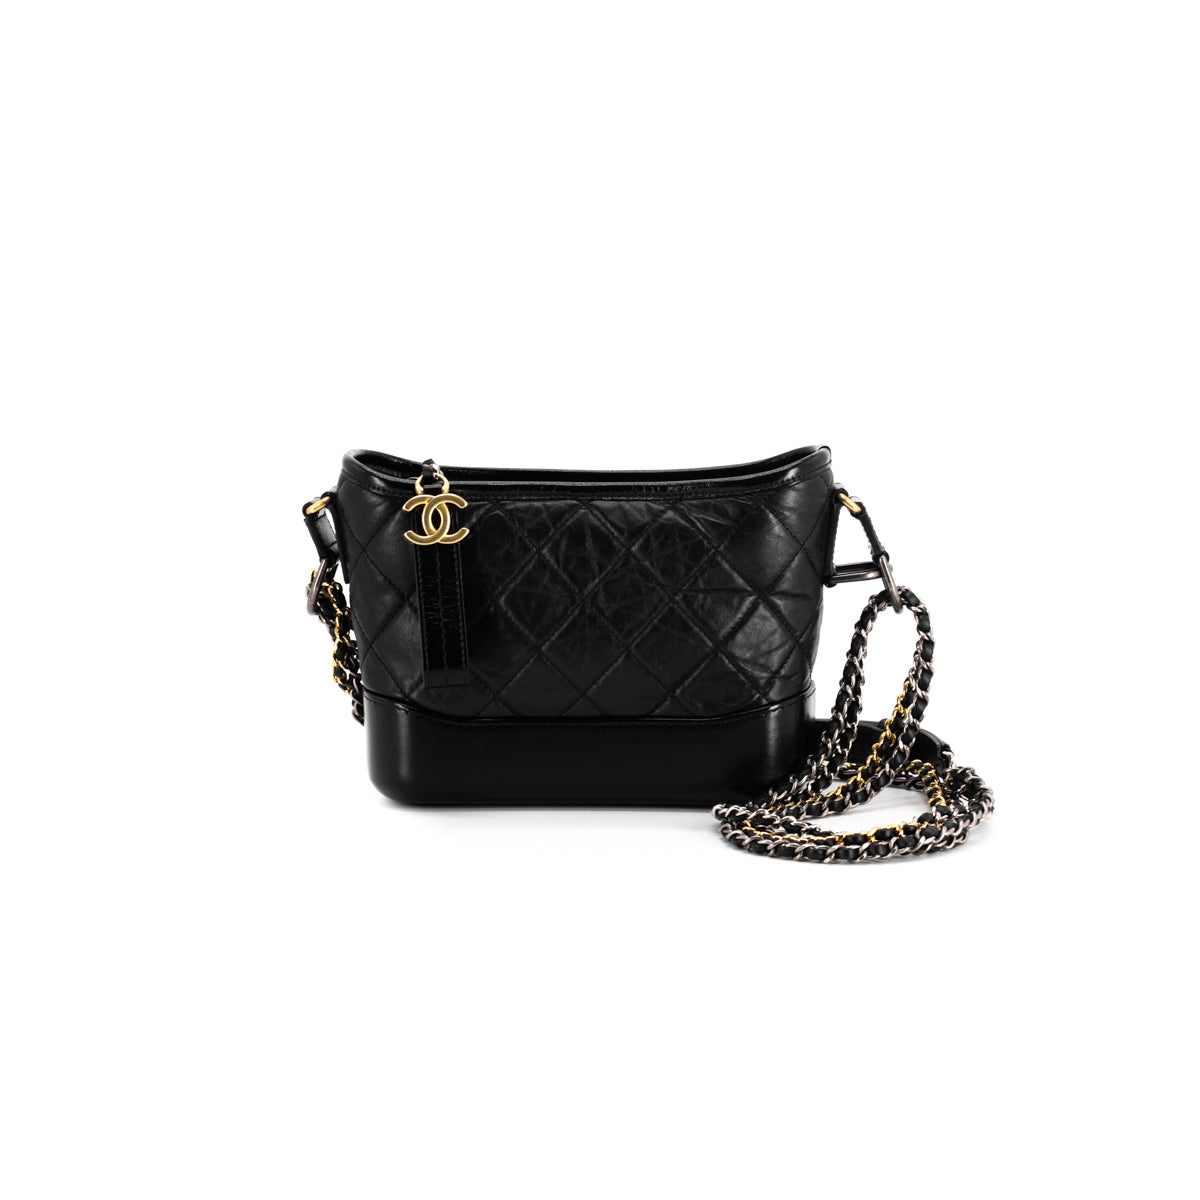 Chanel Gabrielle Medium Hobo Bag in Black Distressed Calfskin